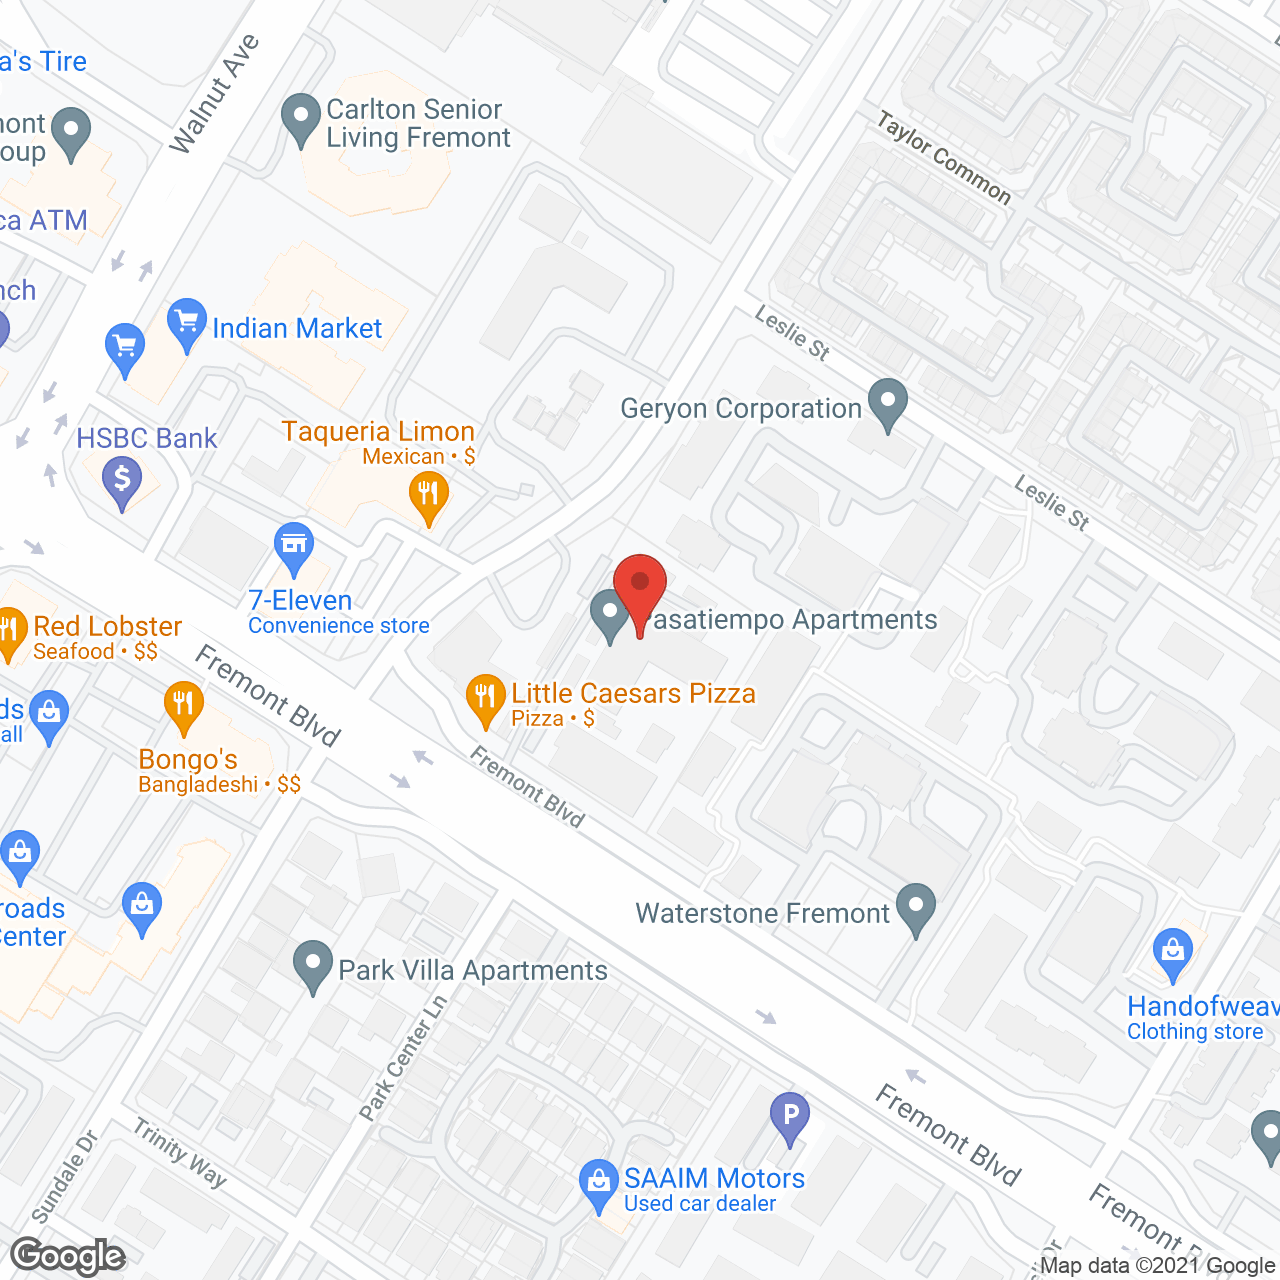 Pasa Tiempo Apartments in google map